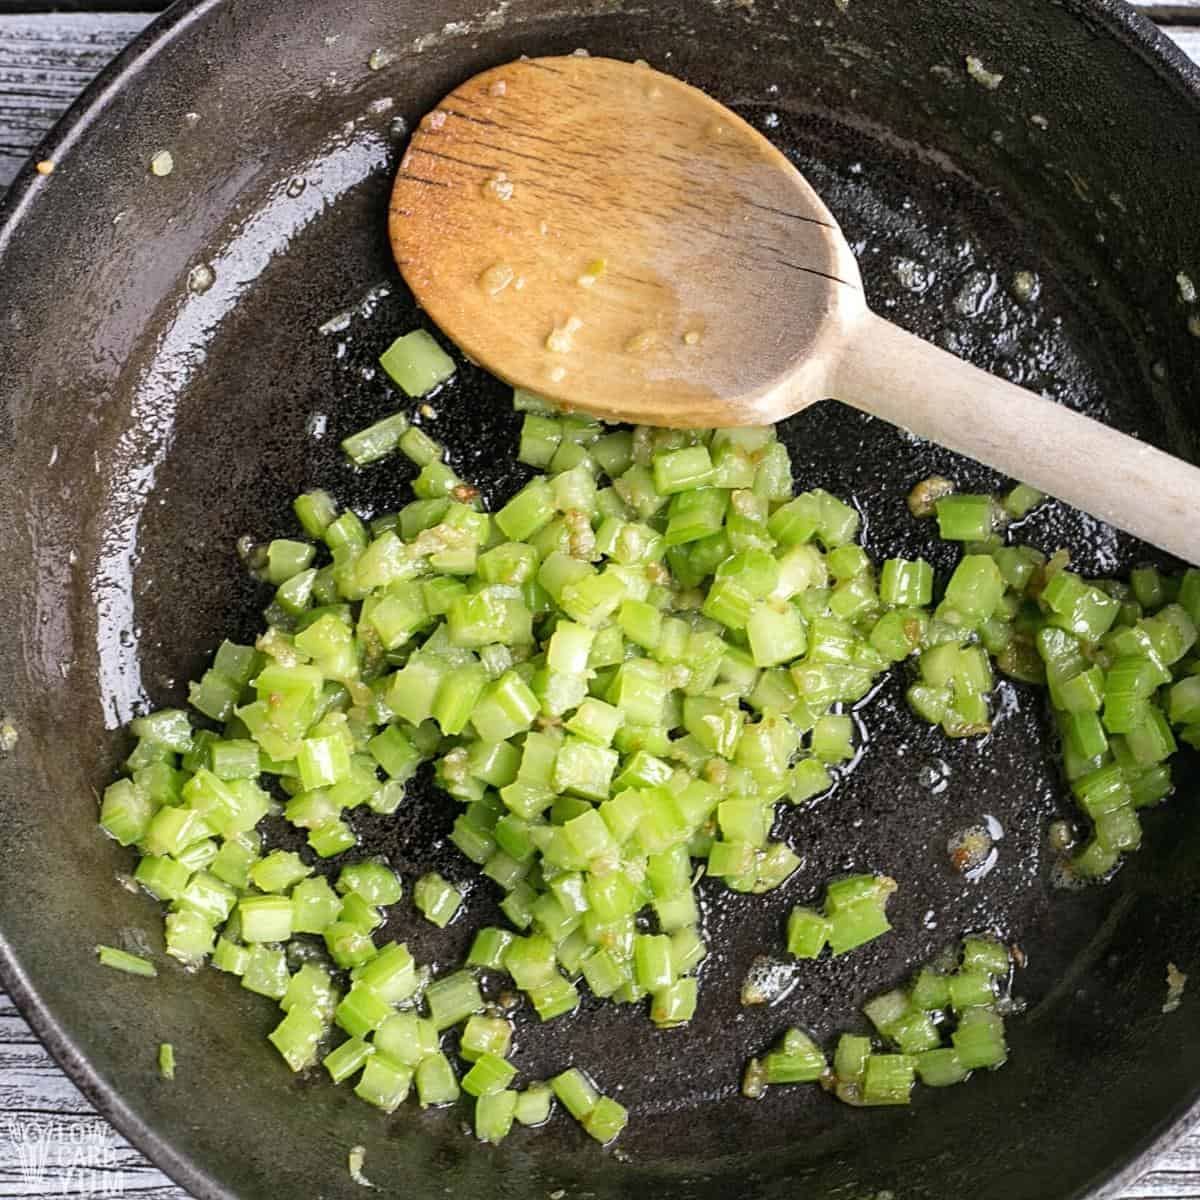 sautéed garlic and celery.